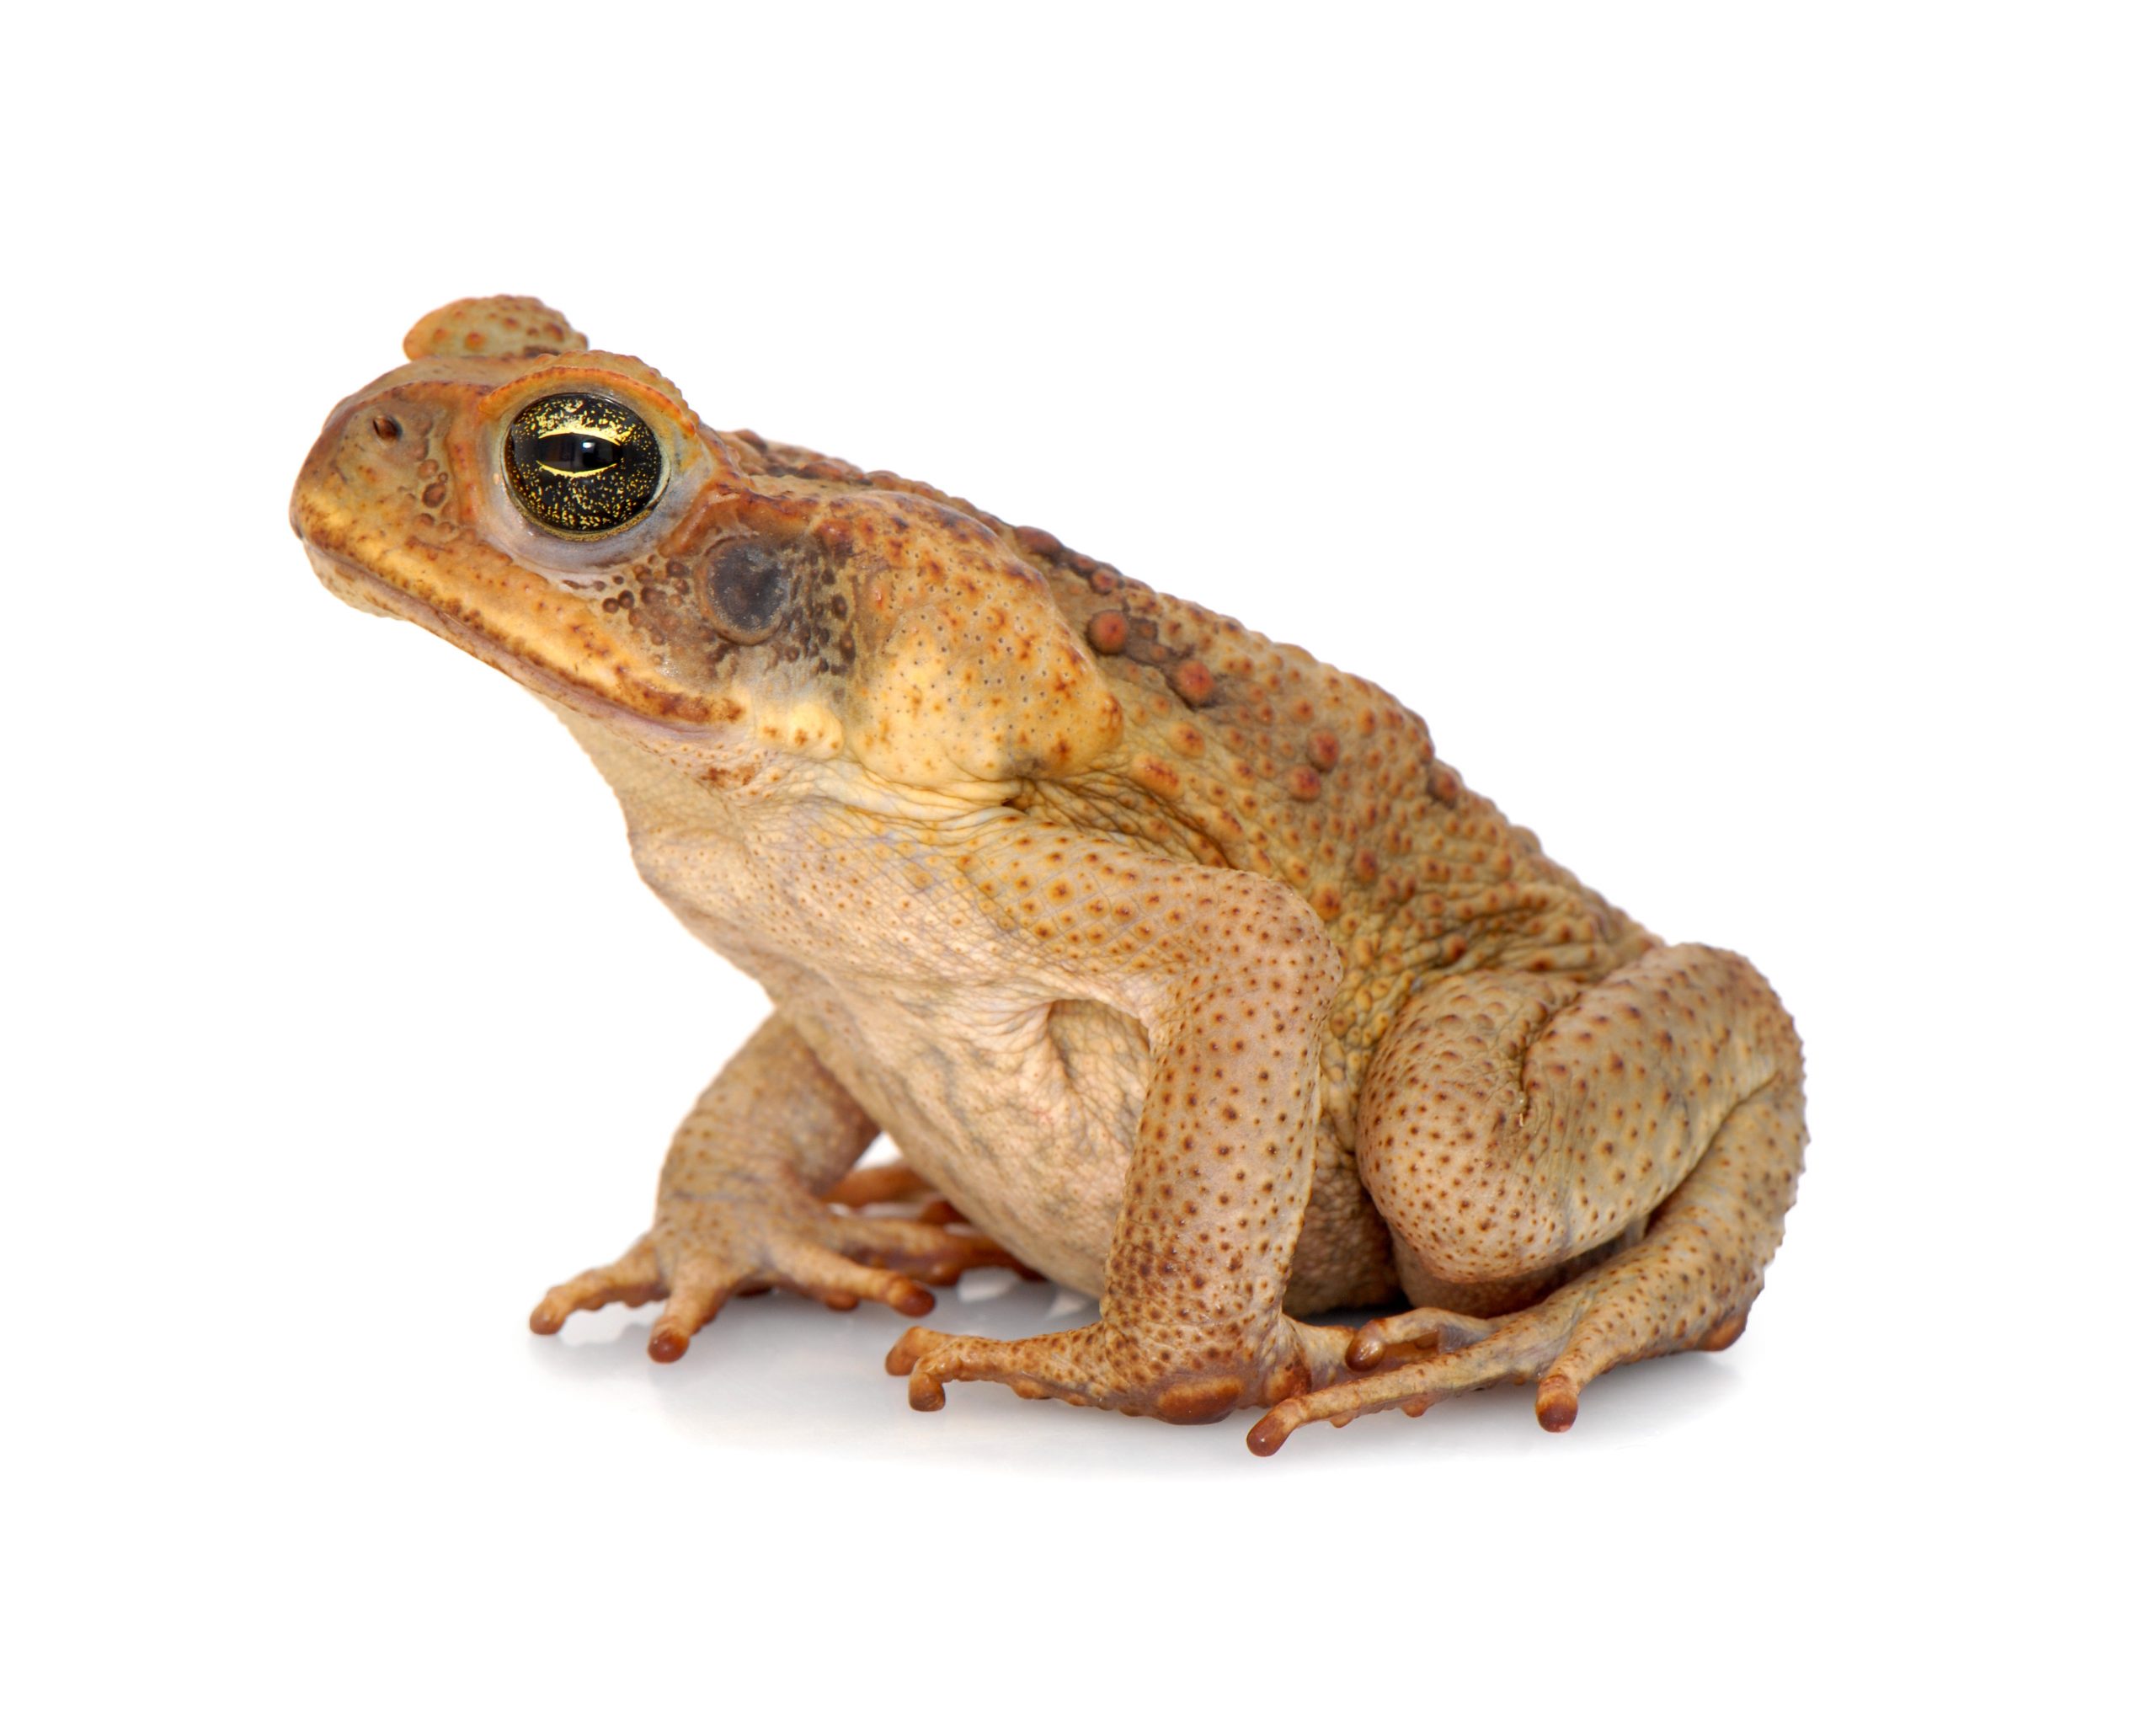 Image of a cane toad (Rhinella marina) sitting.